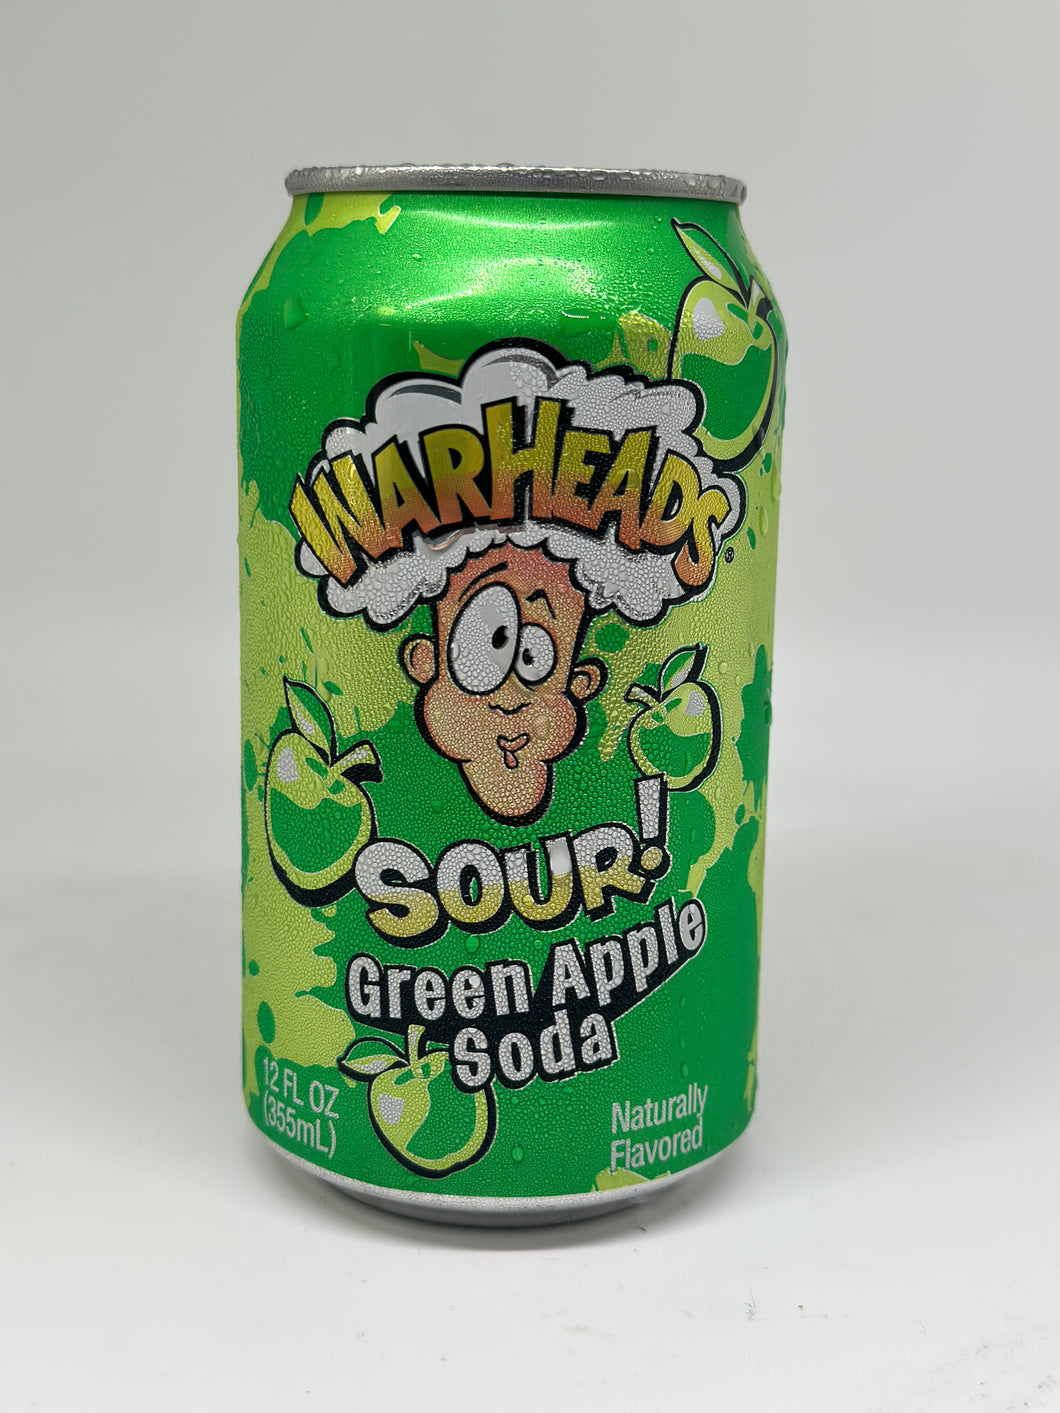 Warheads Green Apple Soda